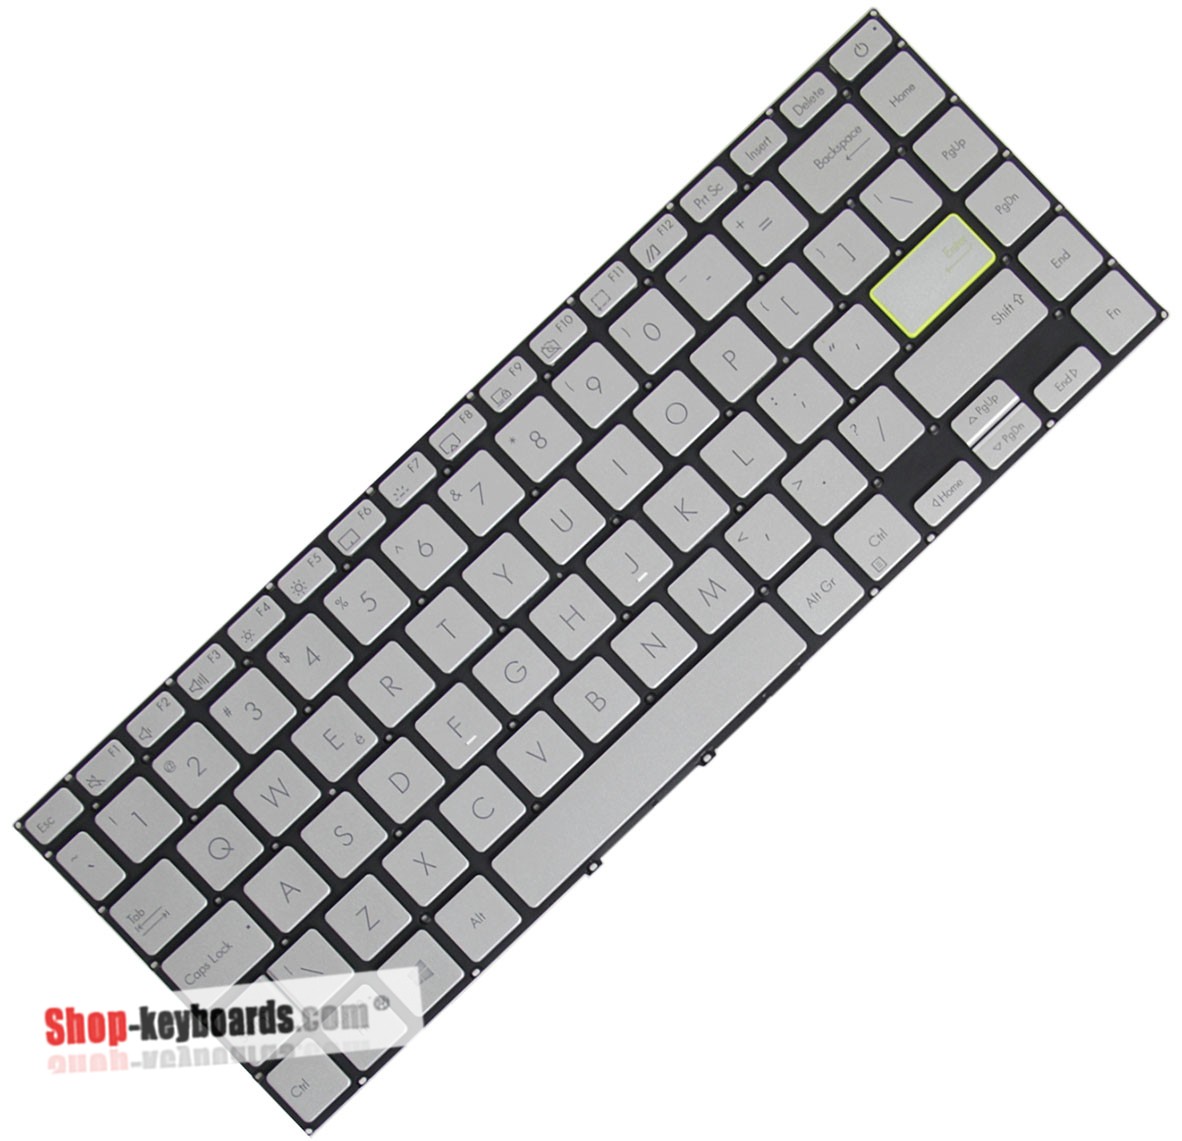 Asus AEXKSQ01150  Keyboard replacement